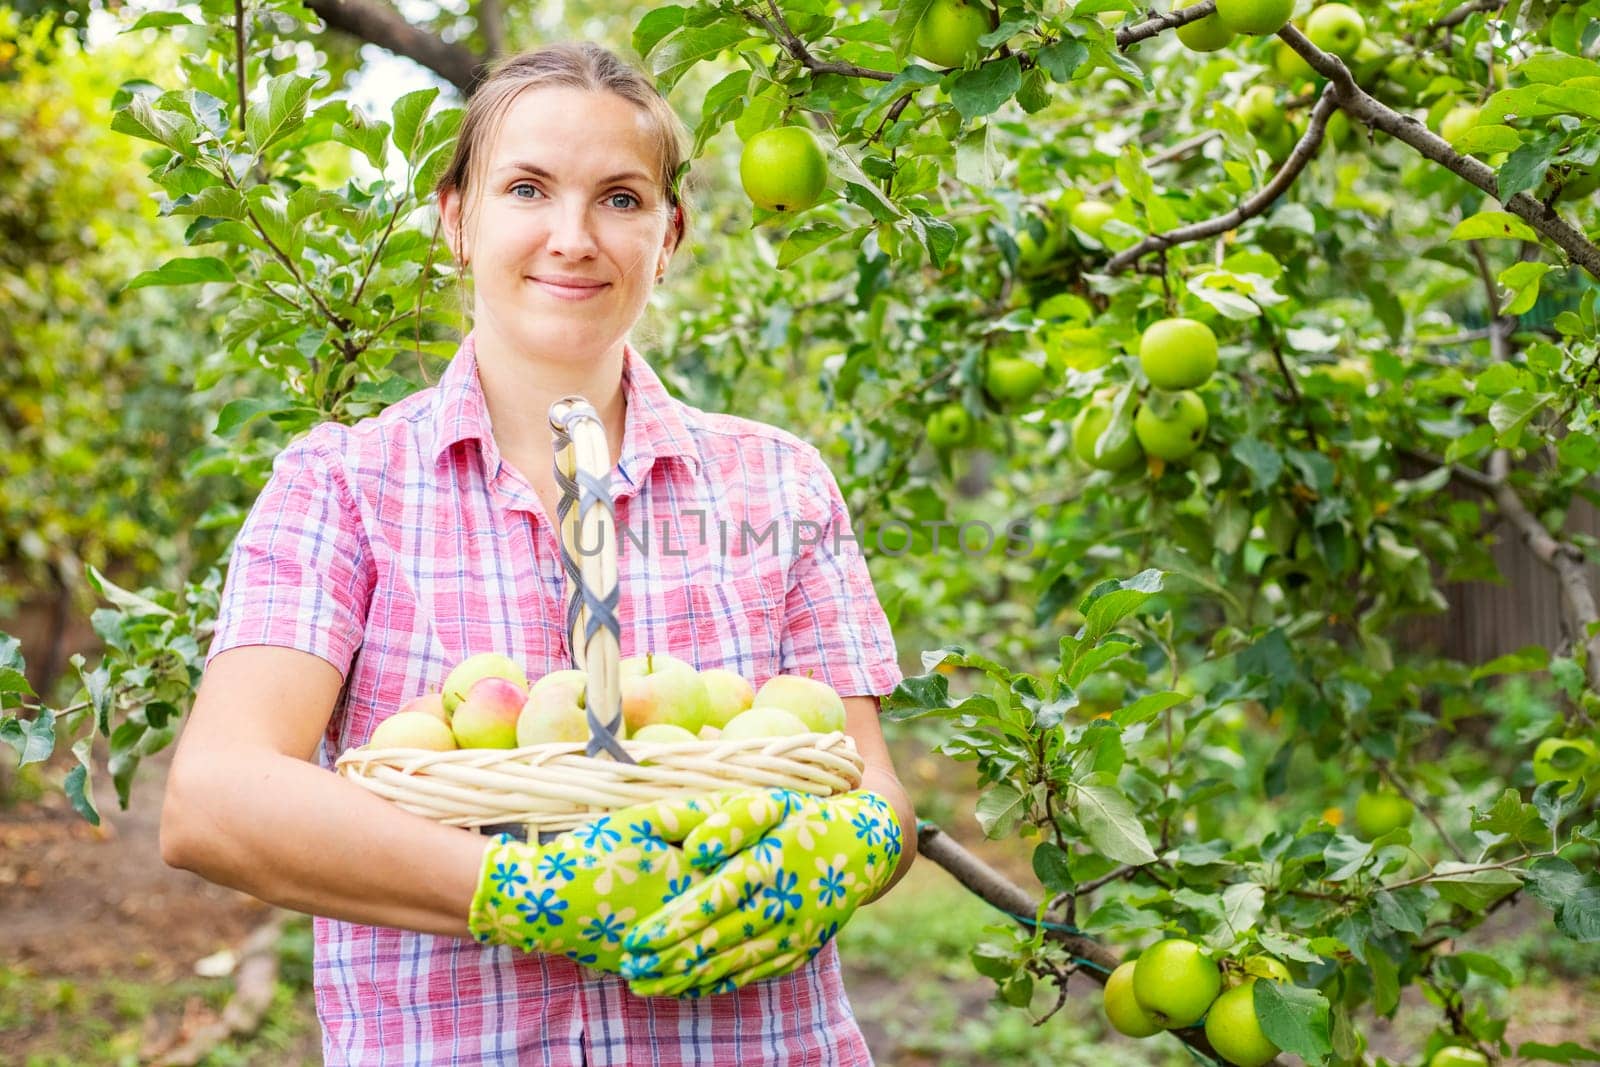 Woman farmer in gloves with freshly picked ripe apples in a wicker basket by andreyz